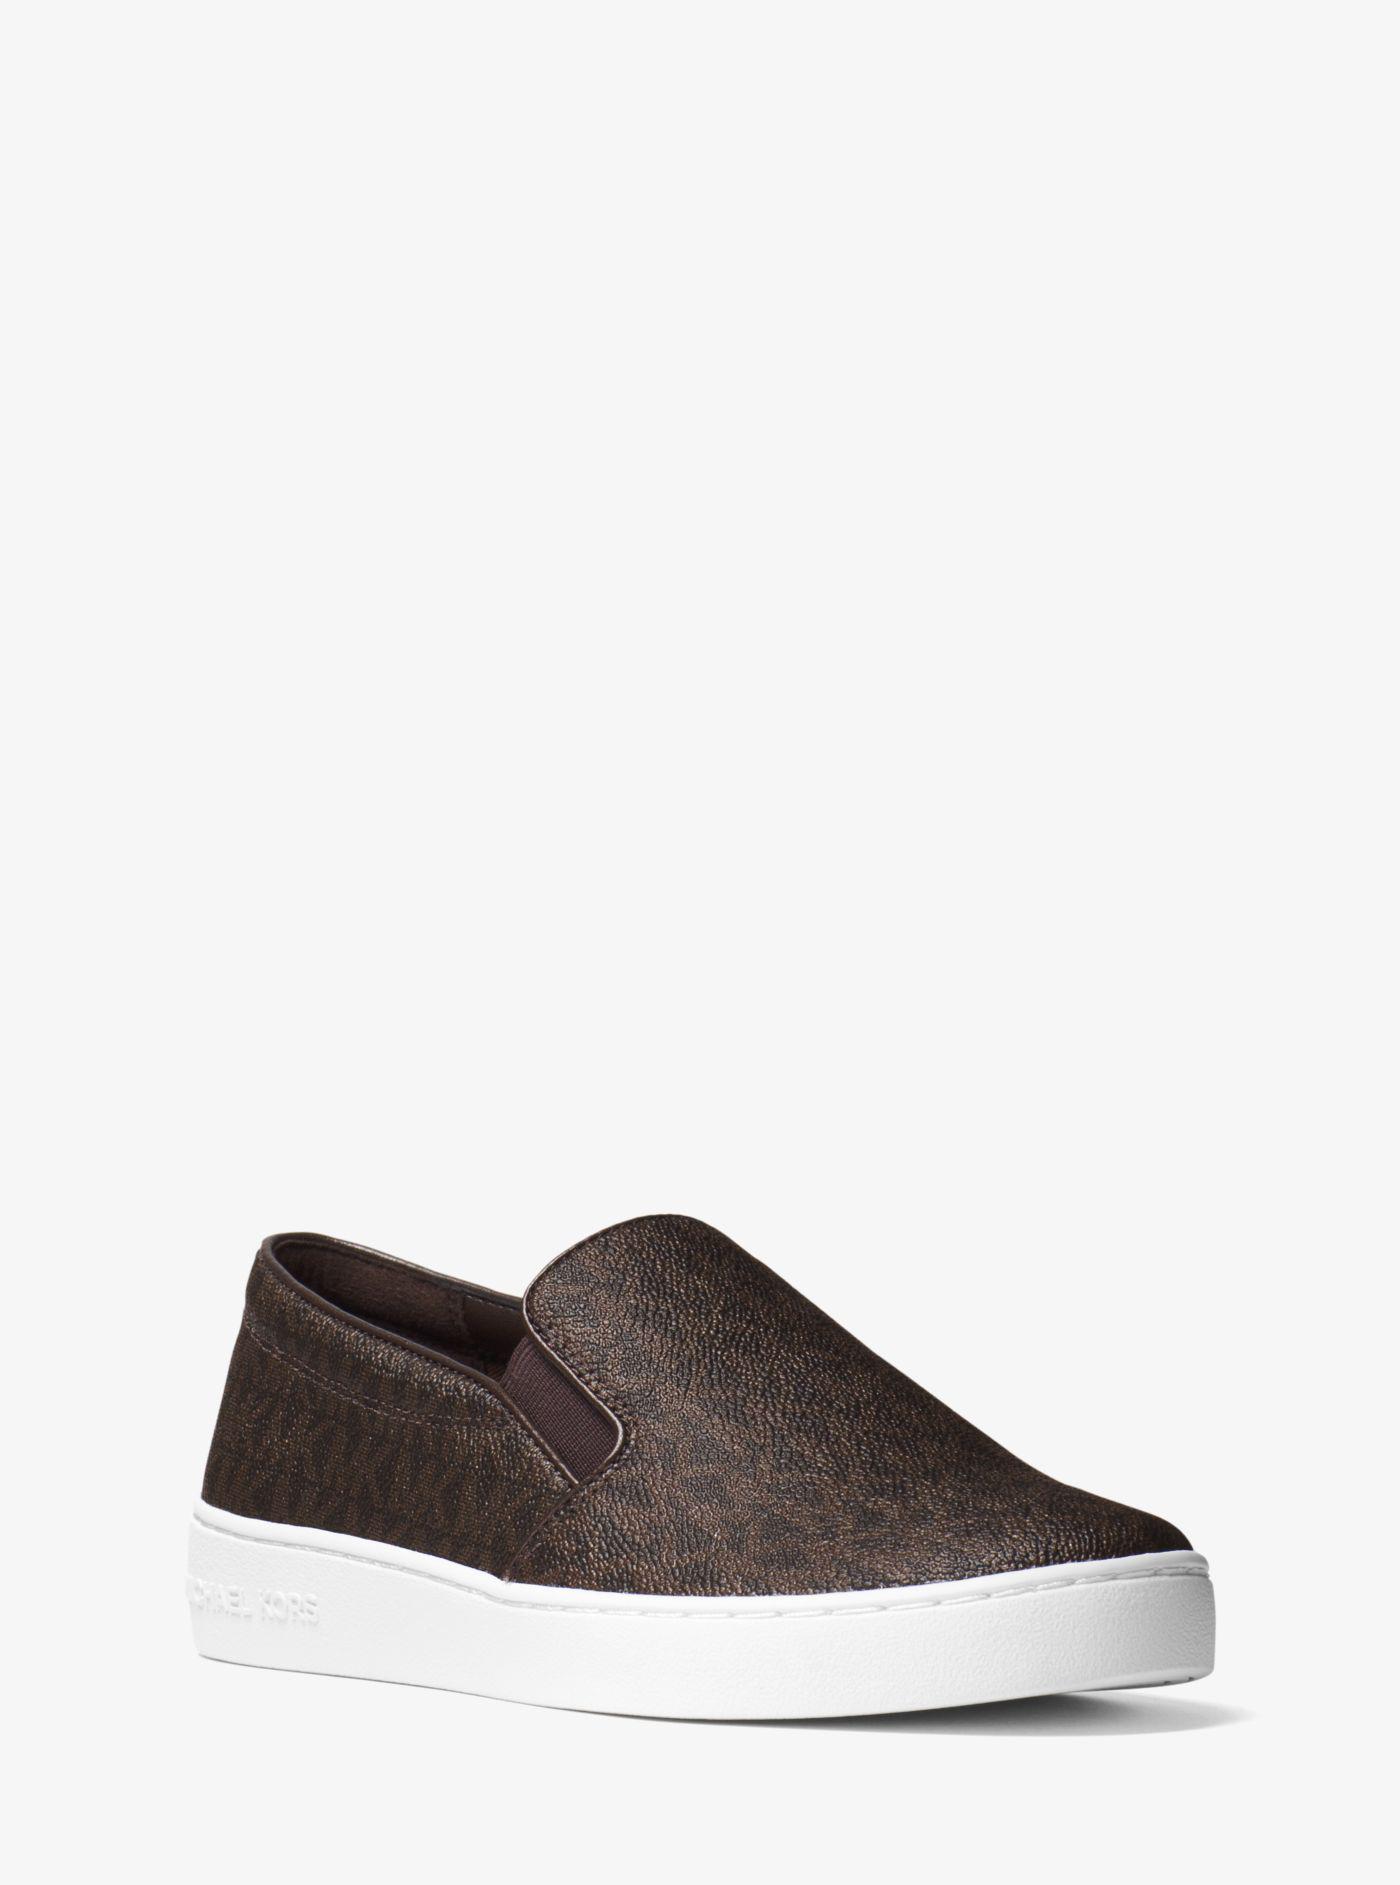 Michael Kors Keaton Logo Slip-on Sneaker in Brown | Lyst